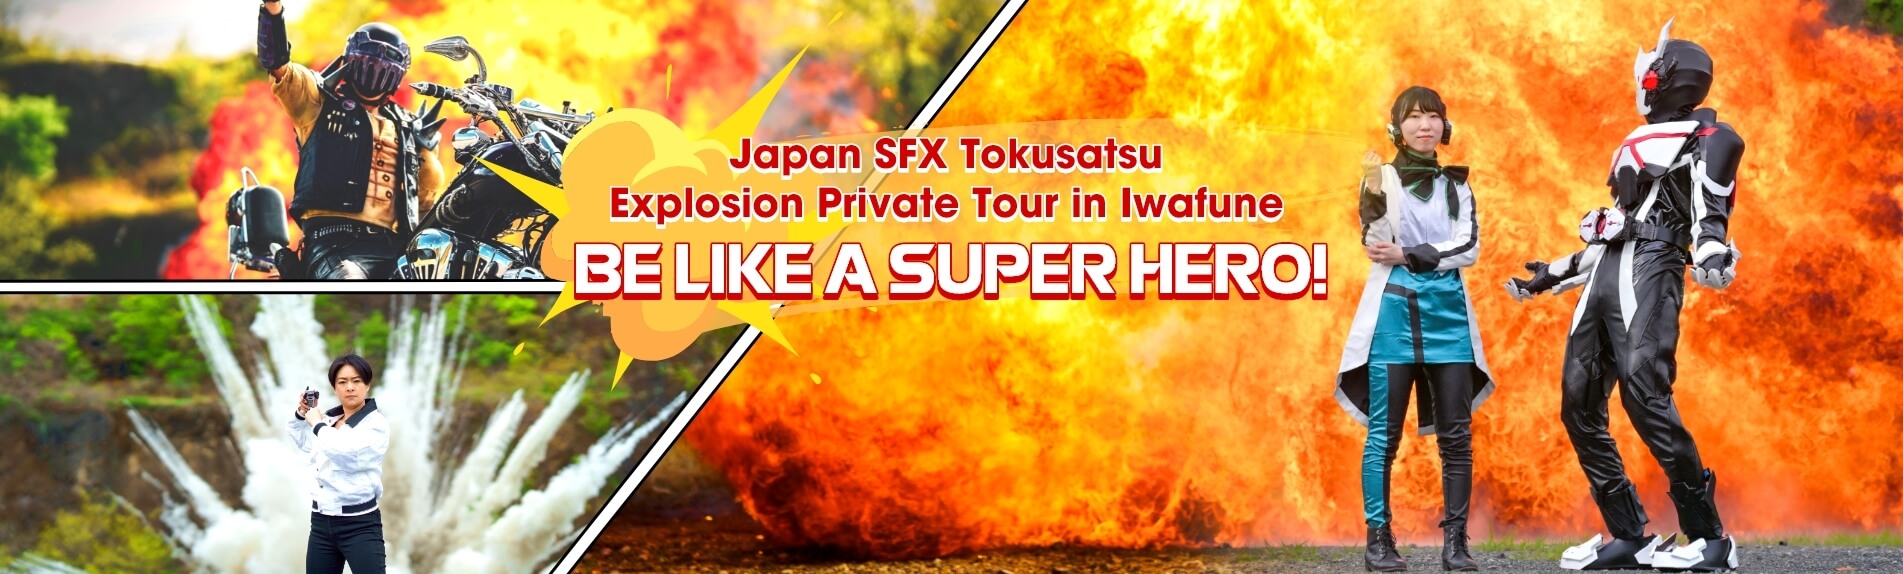 Japan SFX Tokusatsu Explosion Private Tour in Iwafune